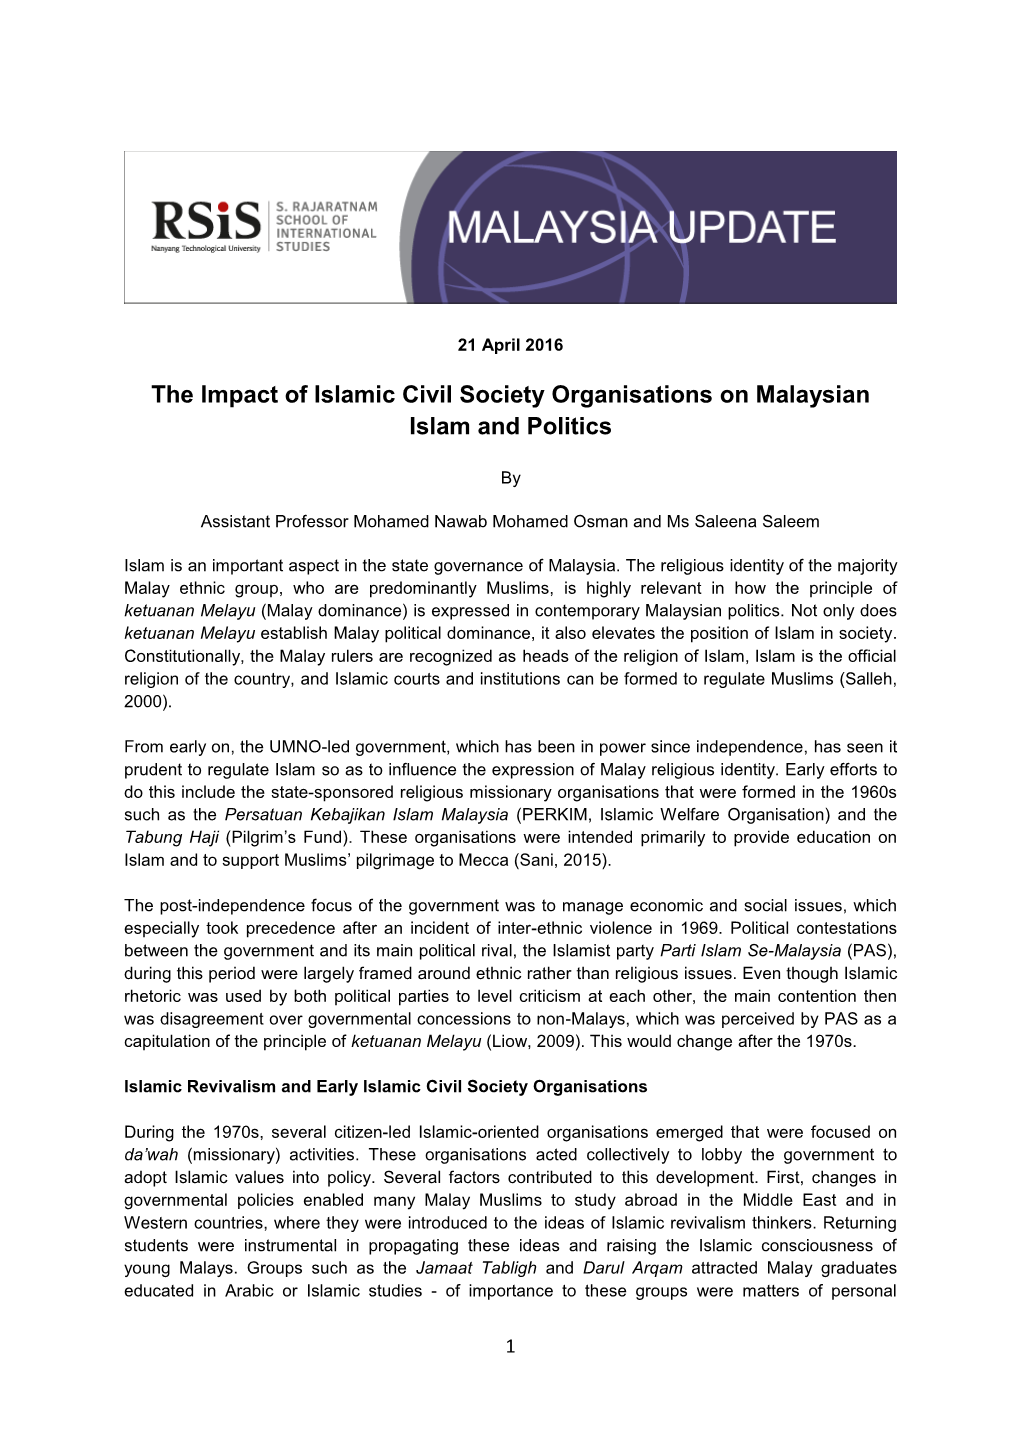 The Impact of Islamic Civil Society Organisations on Malaysian Islam and Politics